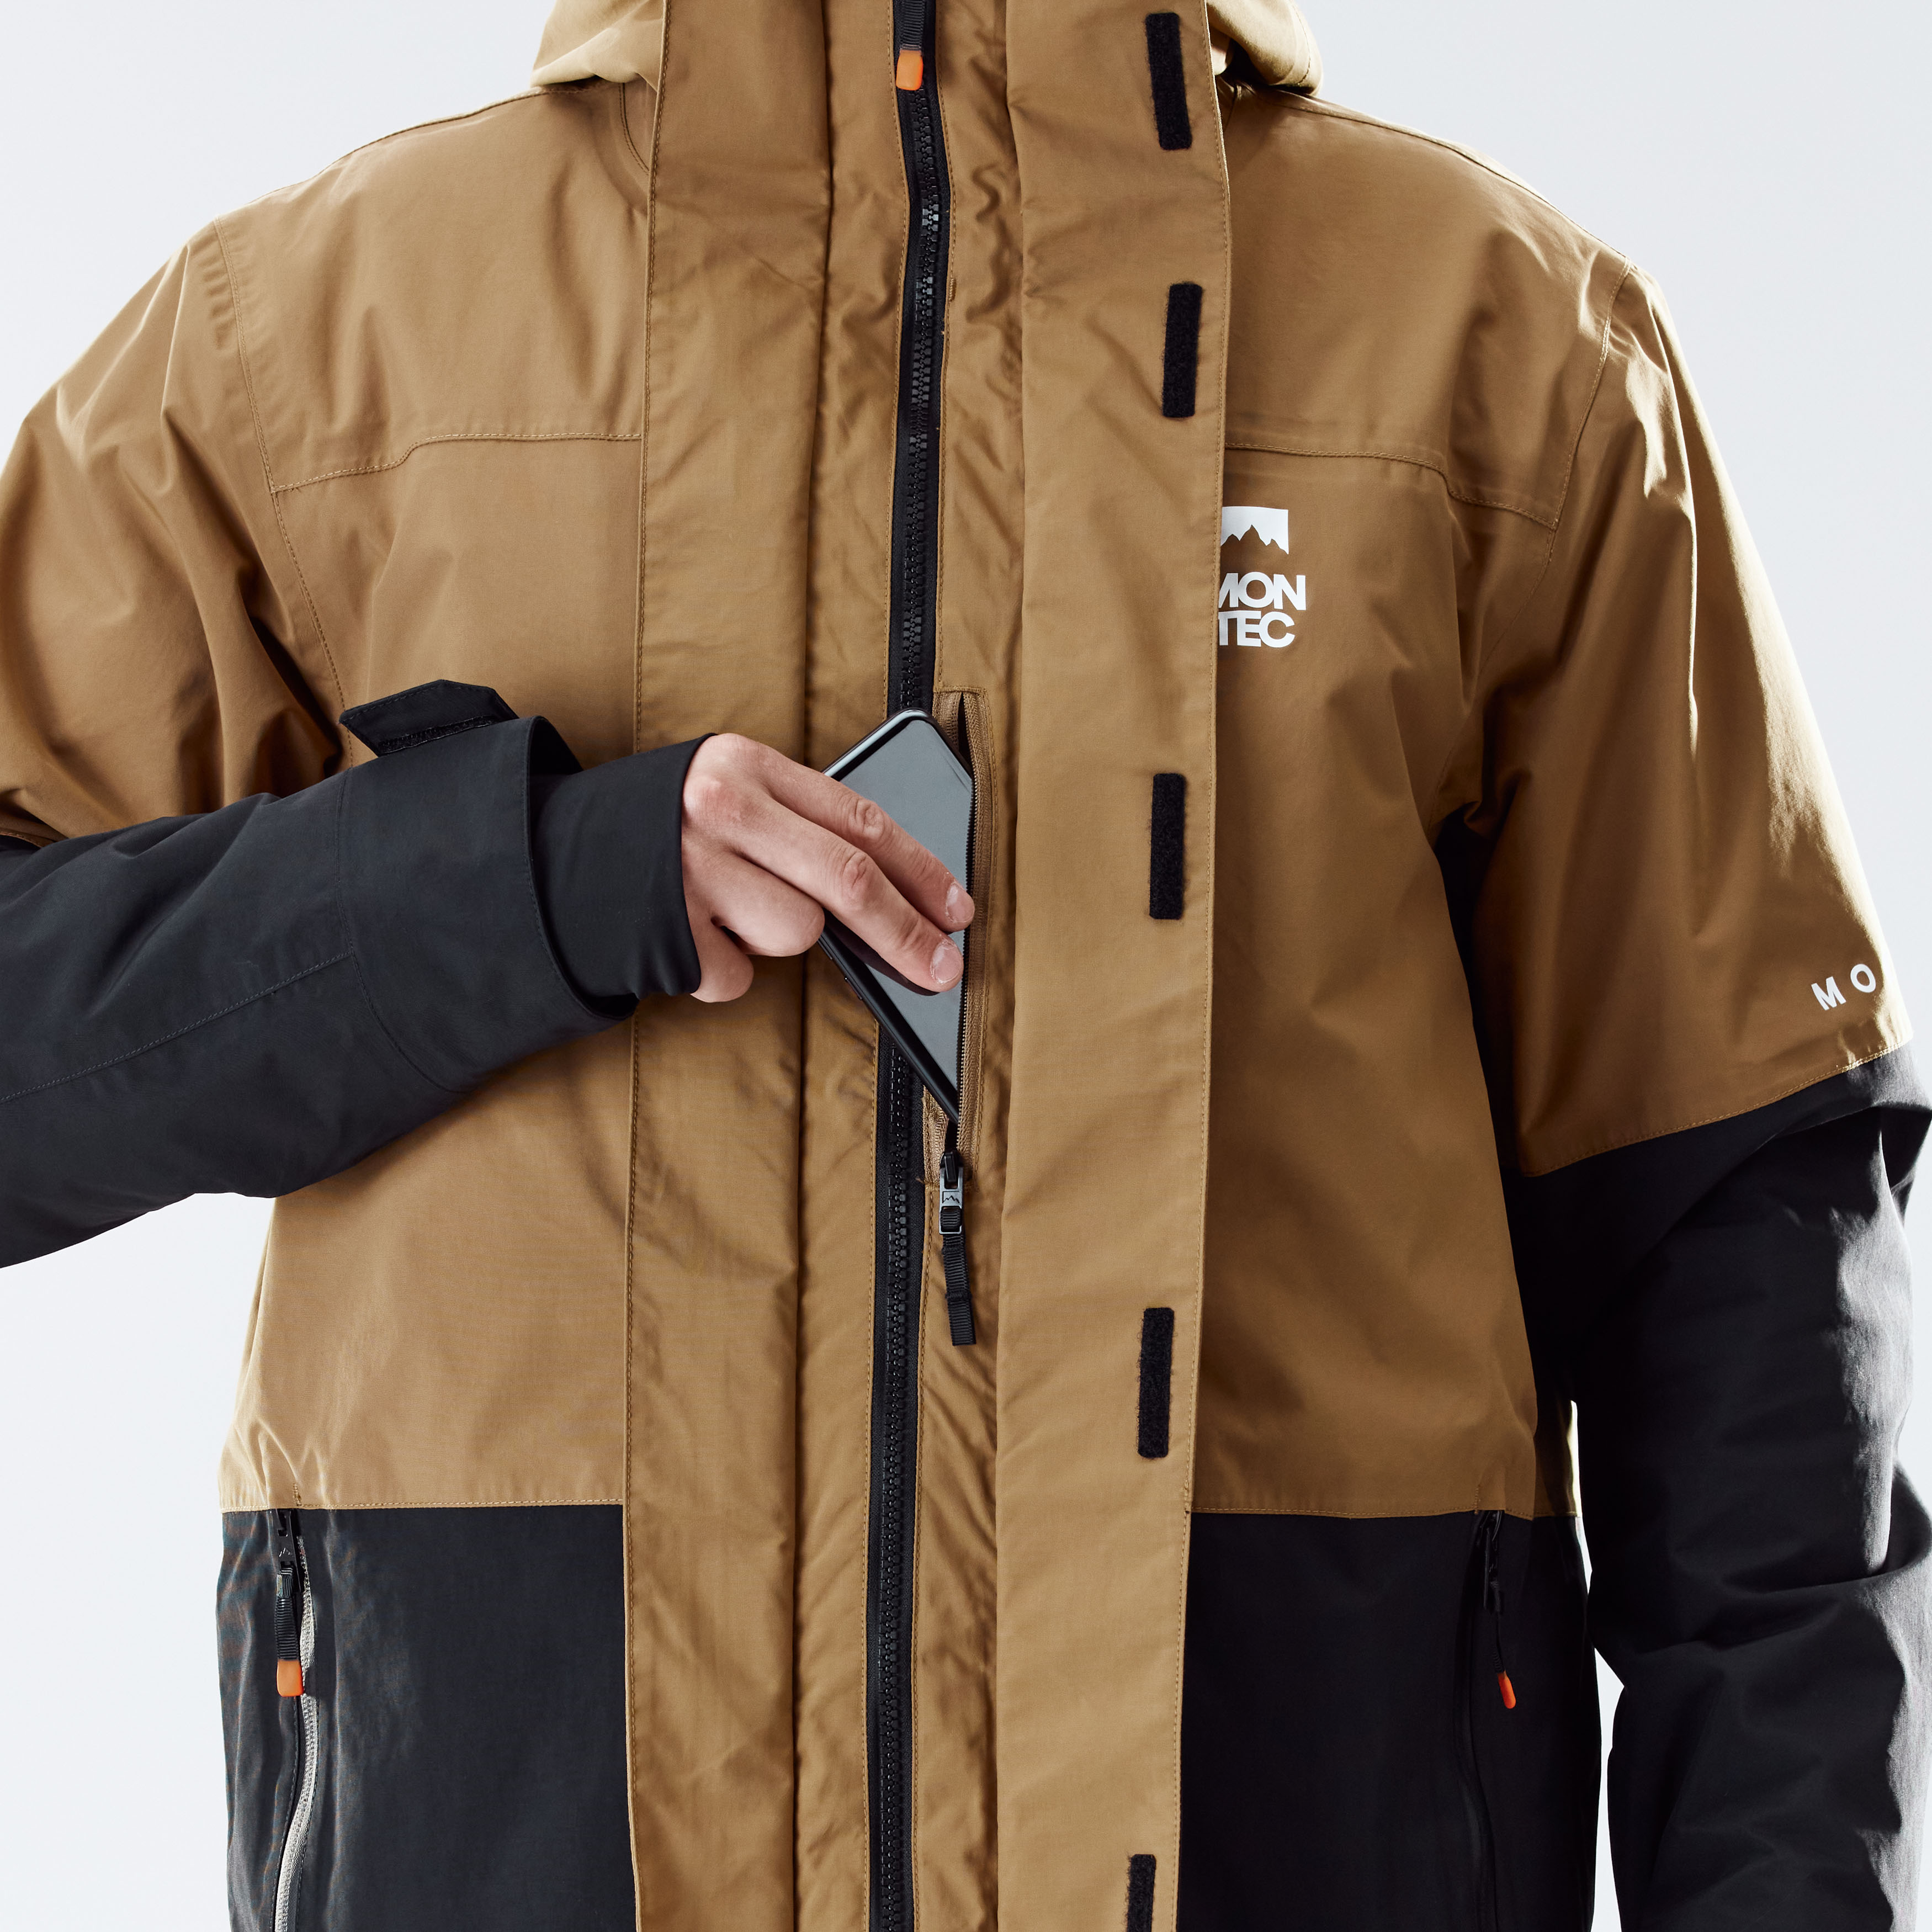 Fawk 2020 Ski Jacket Gold/Black | Montecwear.com